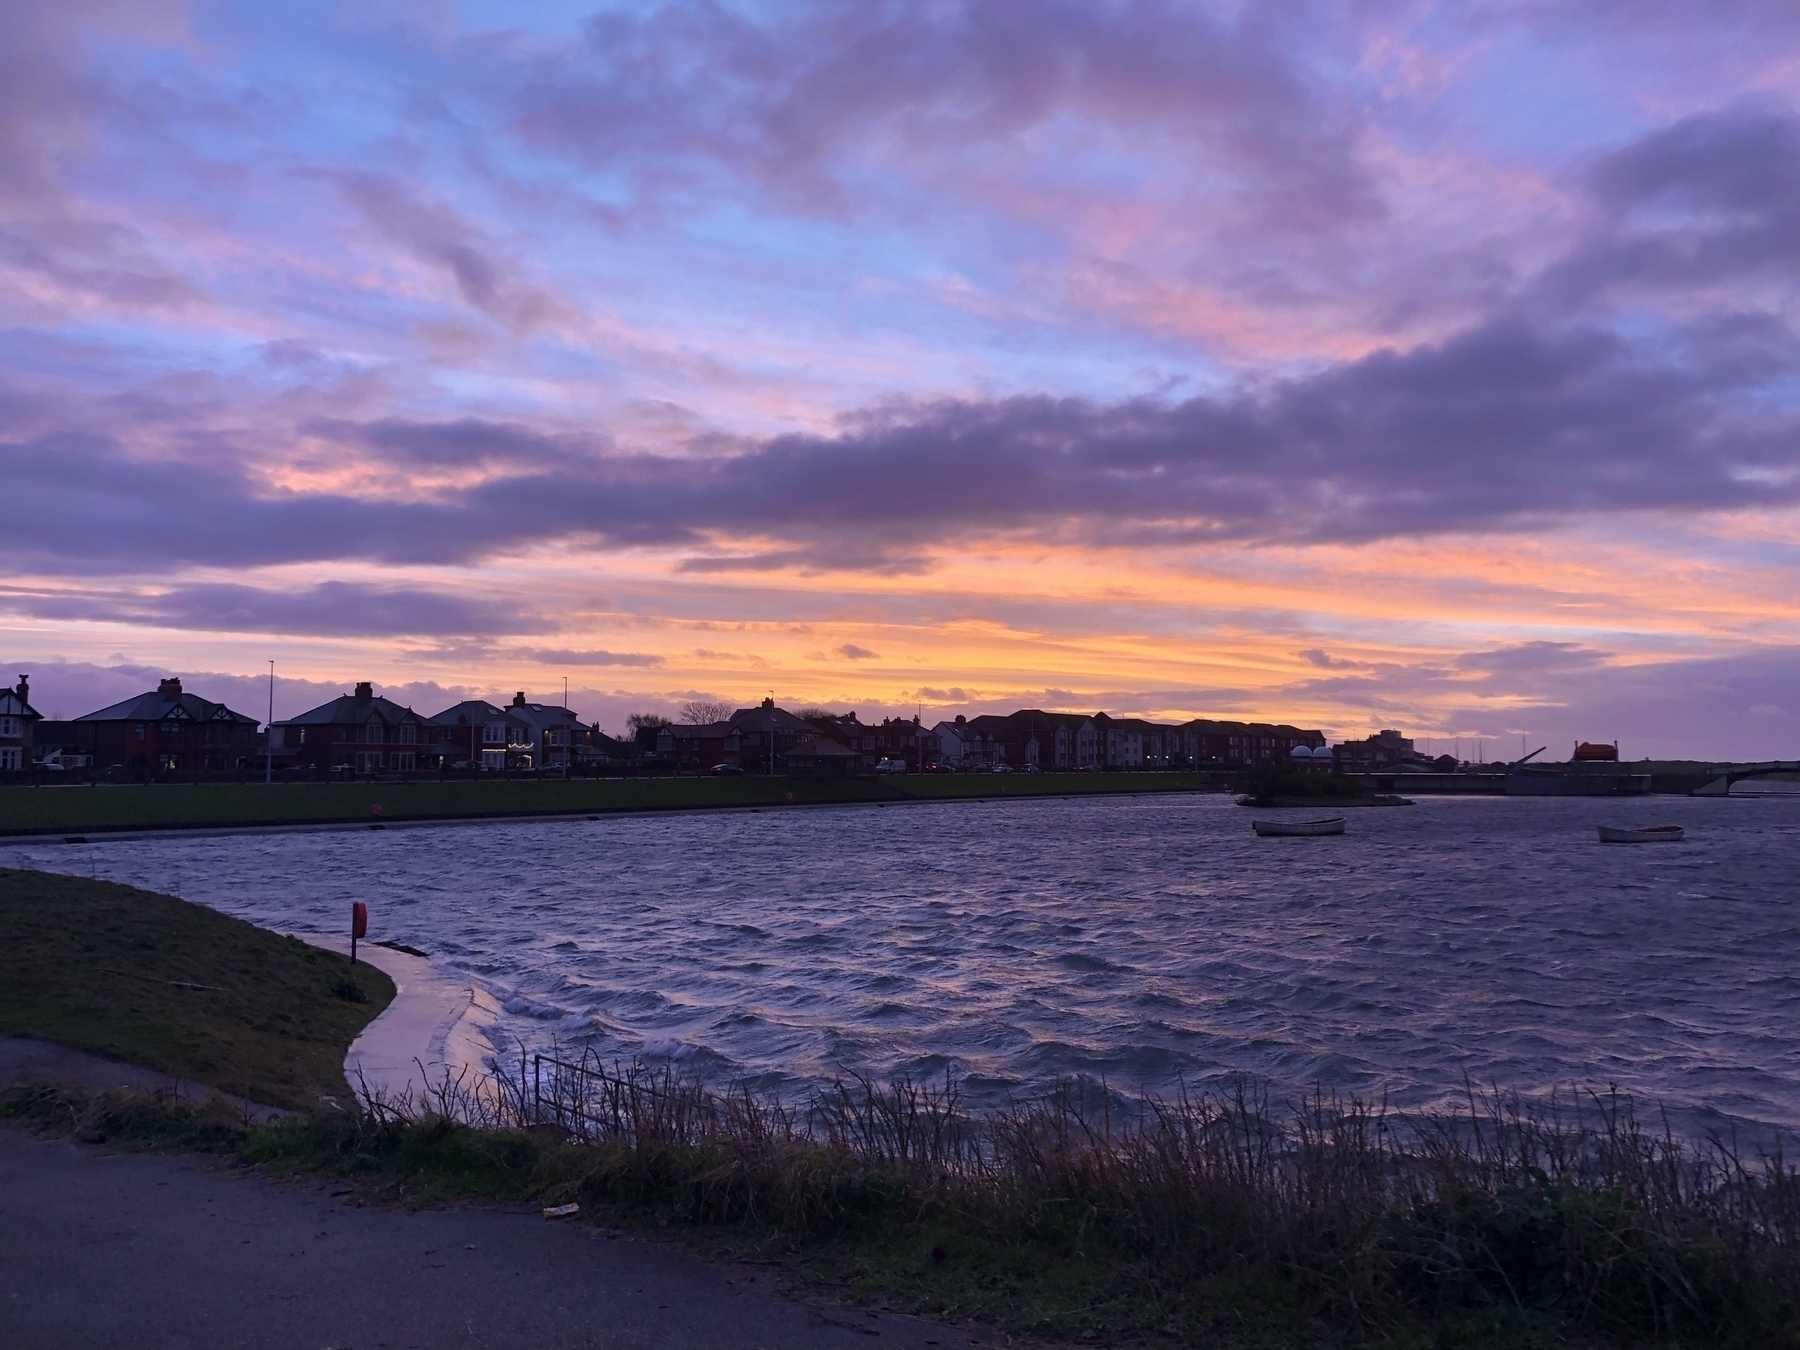 Purple and orange sunset sky over a choppy lake